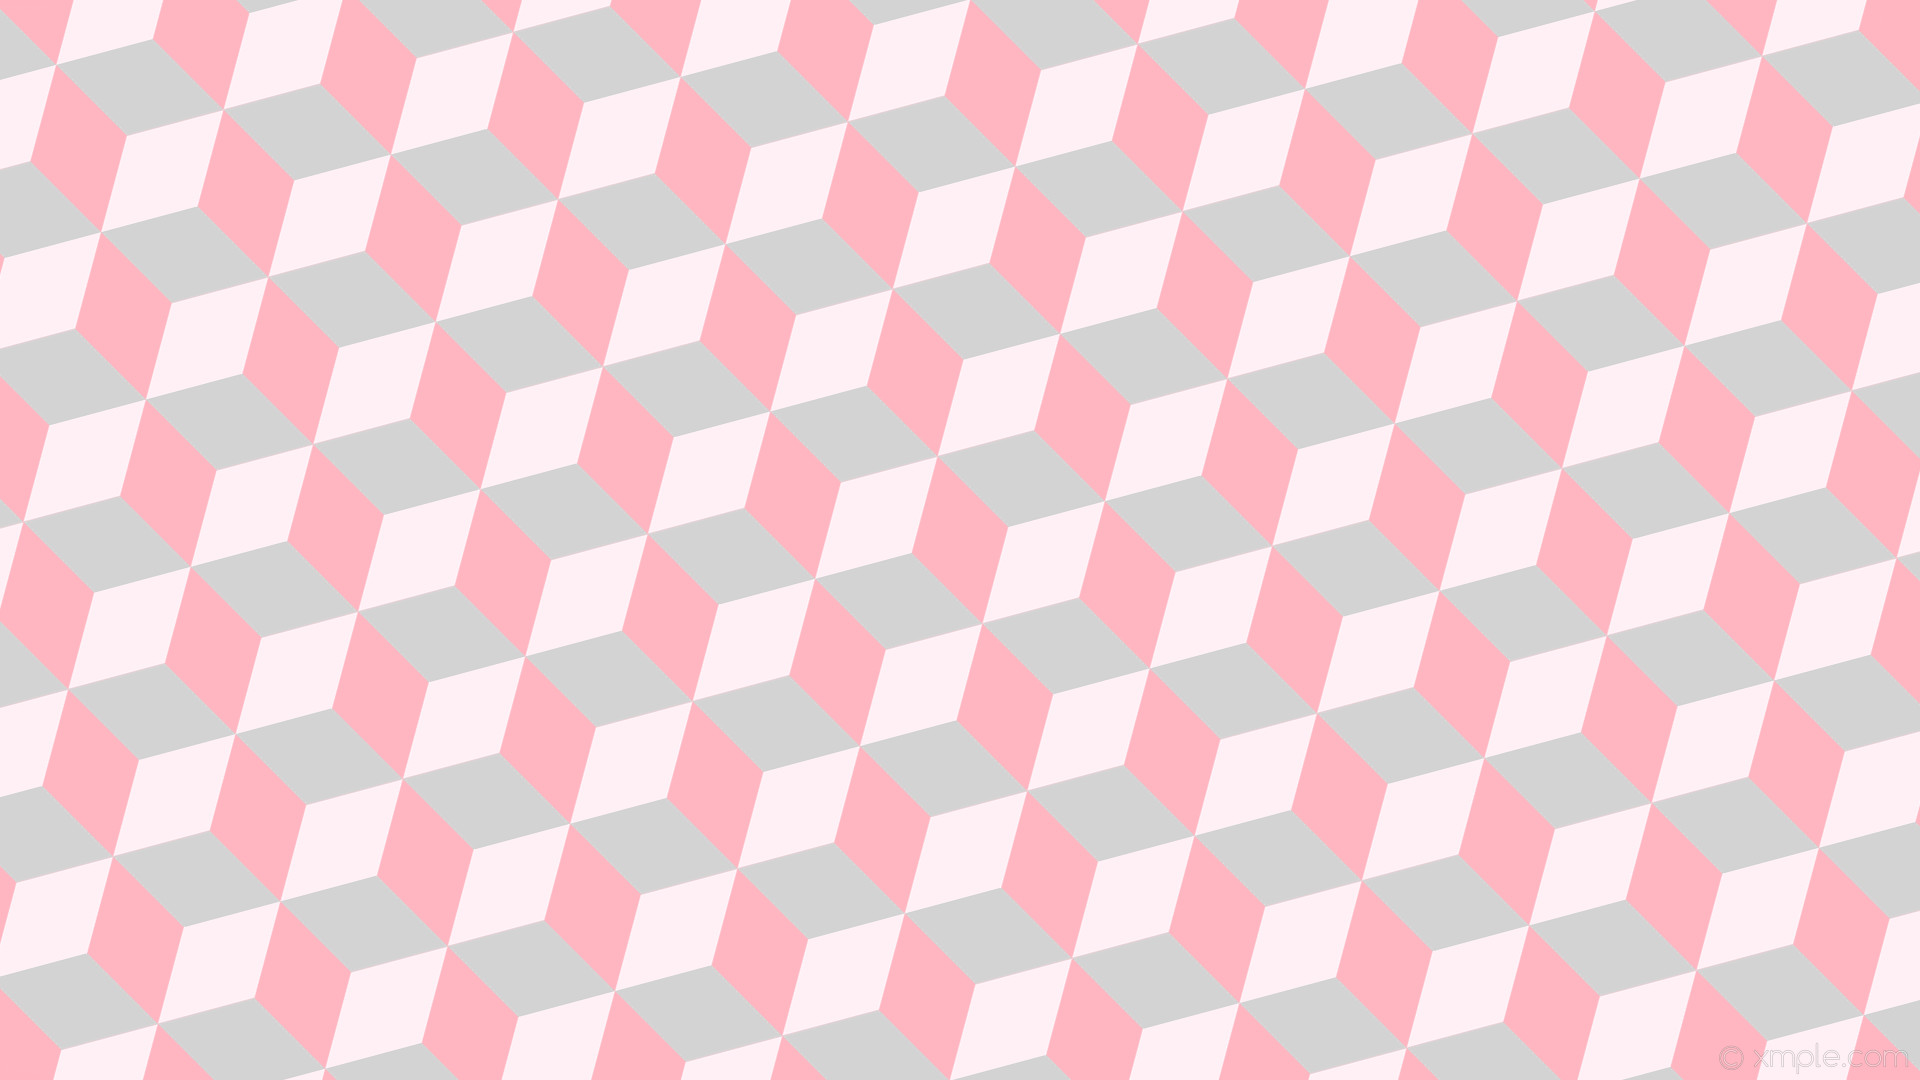 1920x1080 wallpaper 3d cubes grey white pink light pink lavender blush light gray  #ffb6c1 #fff0f5